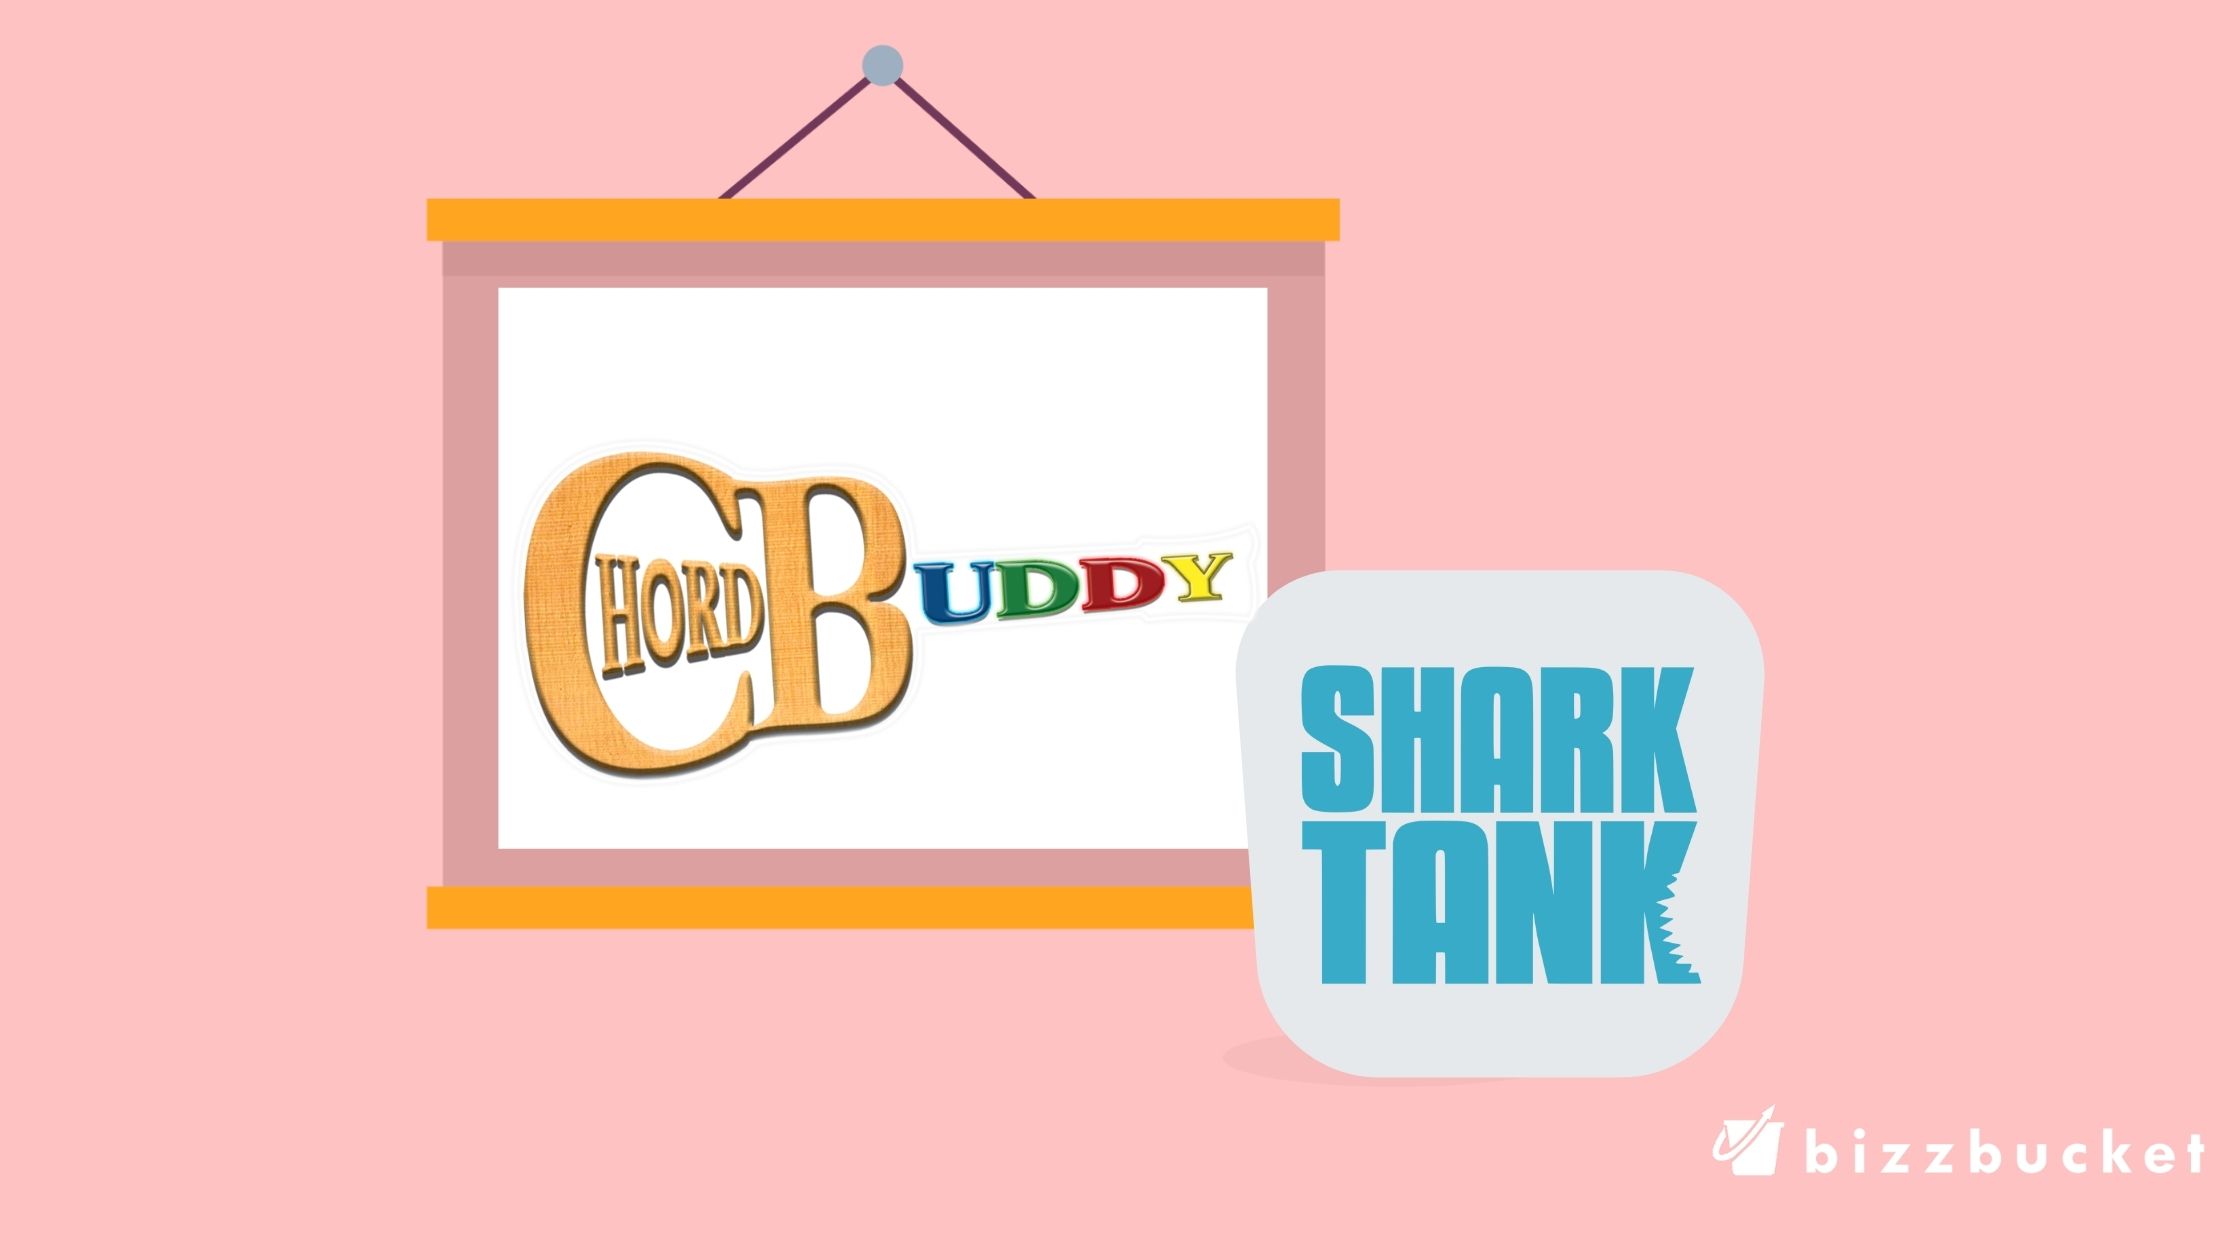 Chord buddy shark tank update